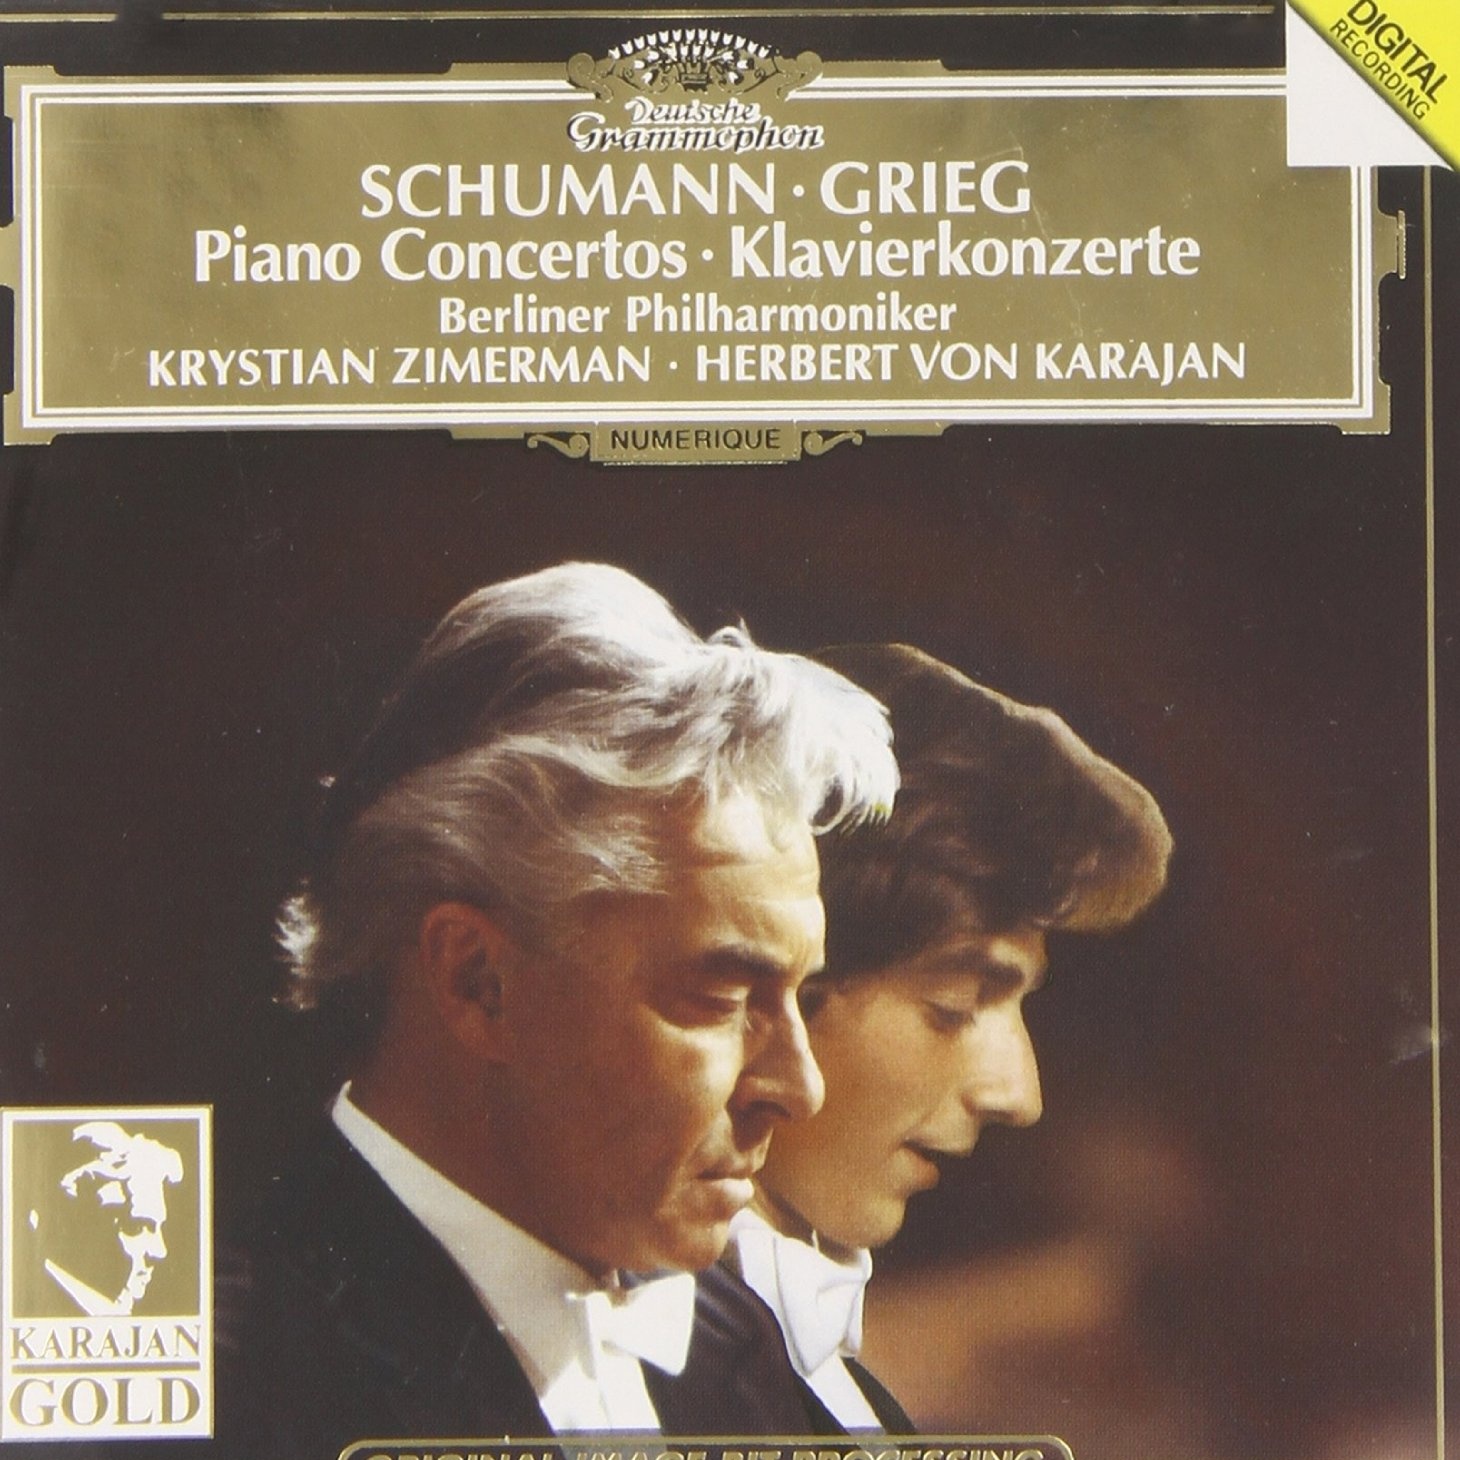 Grieg - Klavierkonzert in a-Moll, Op. 16 - I. Allegro molto moderato